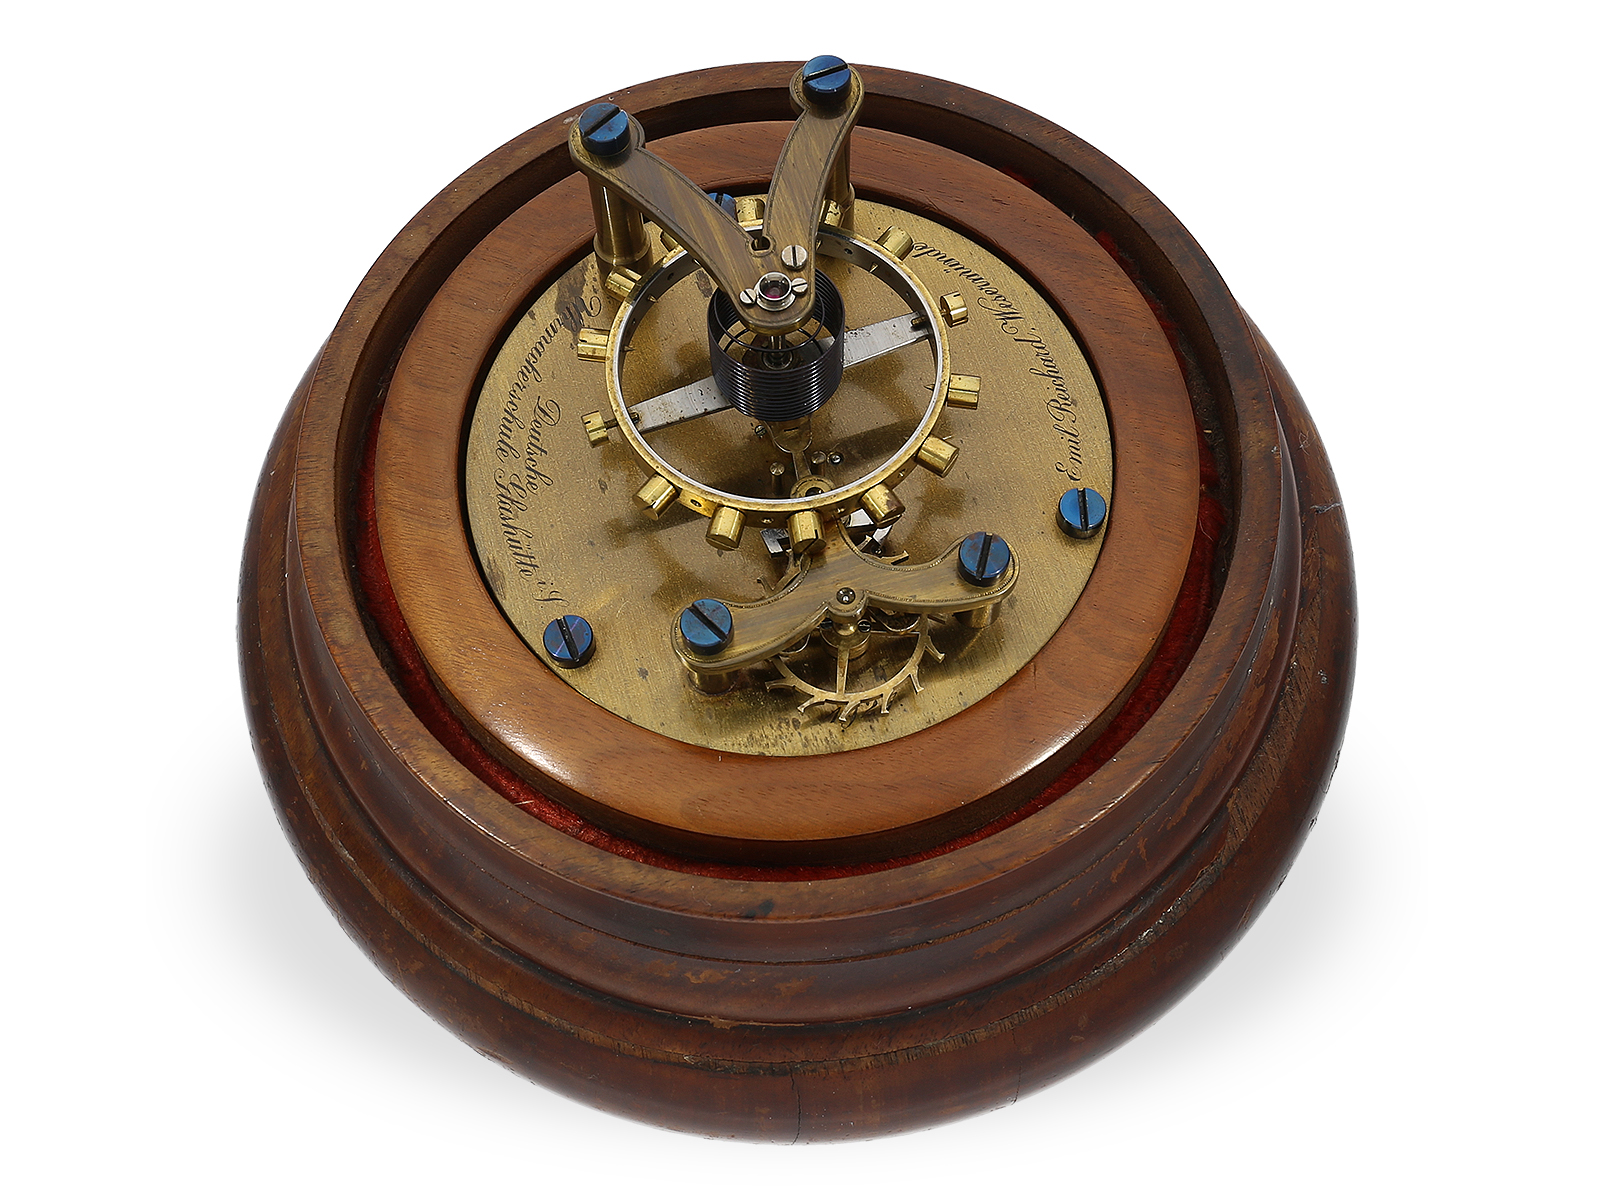 Glashütte school watch, escapement model of a Glashütte Ankerchronometer with helical hairspring, Em - Image 4 of 4